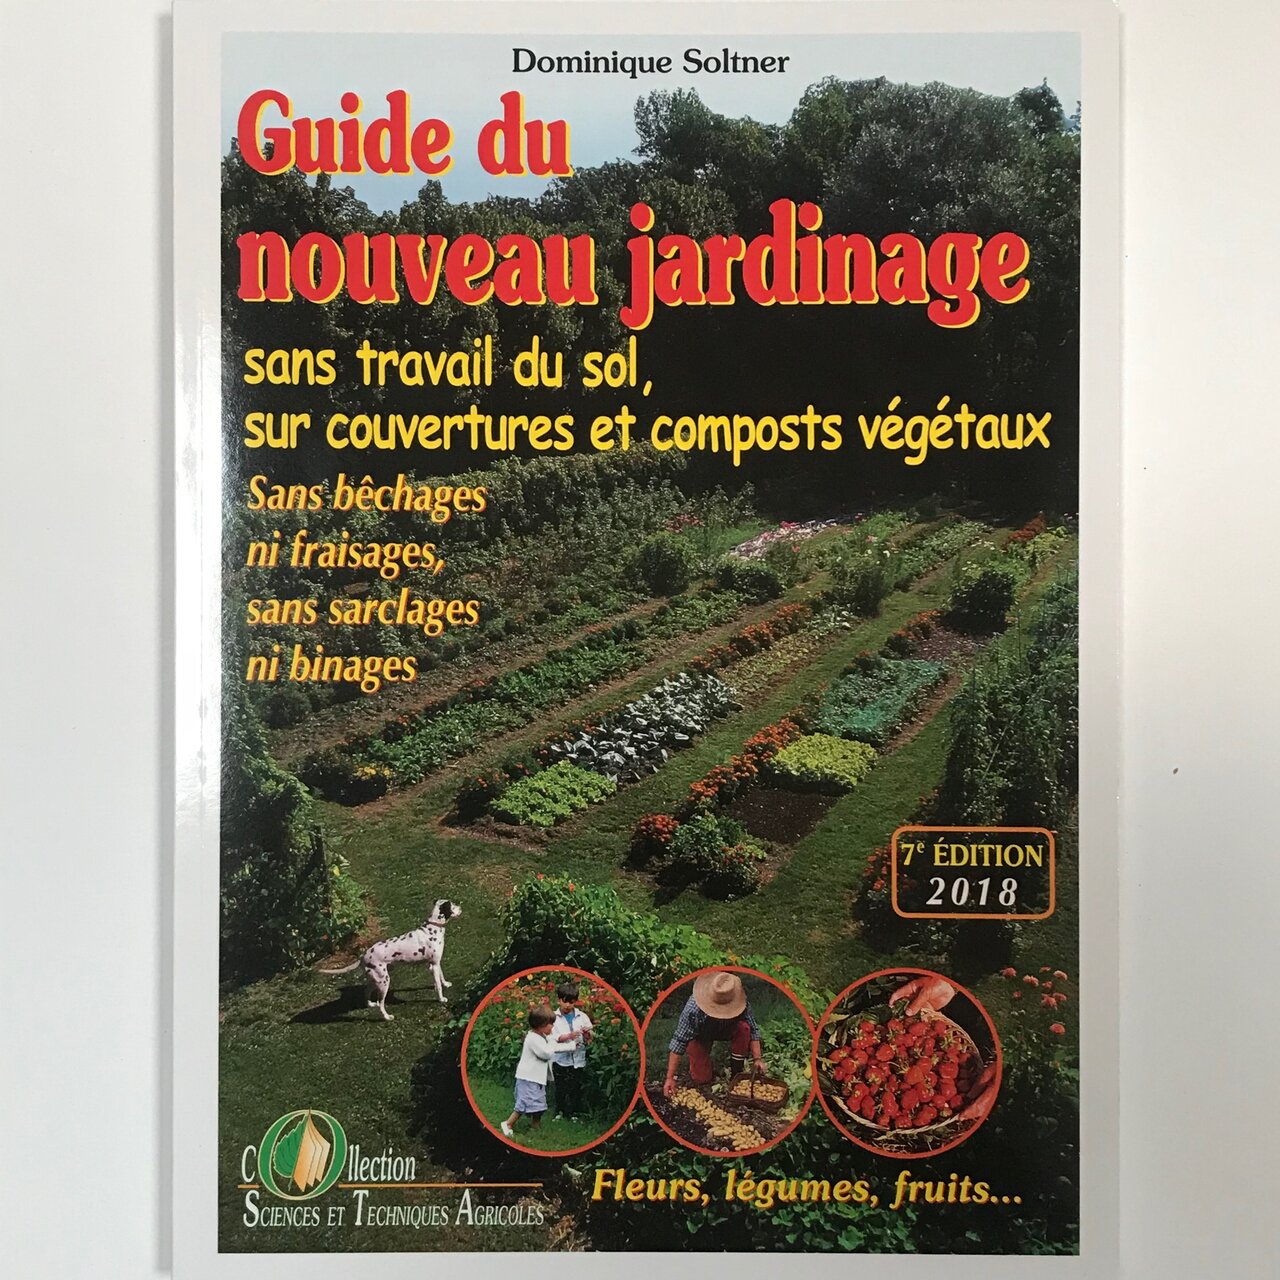 Jardinage - Guide du nouveau jardinage | Association Kokopelli